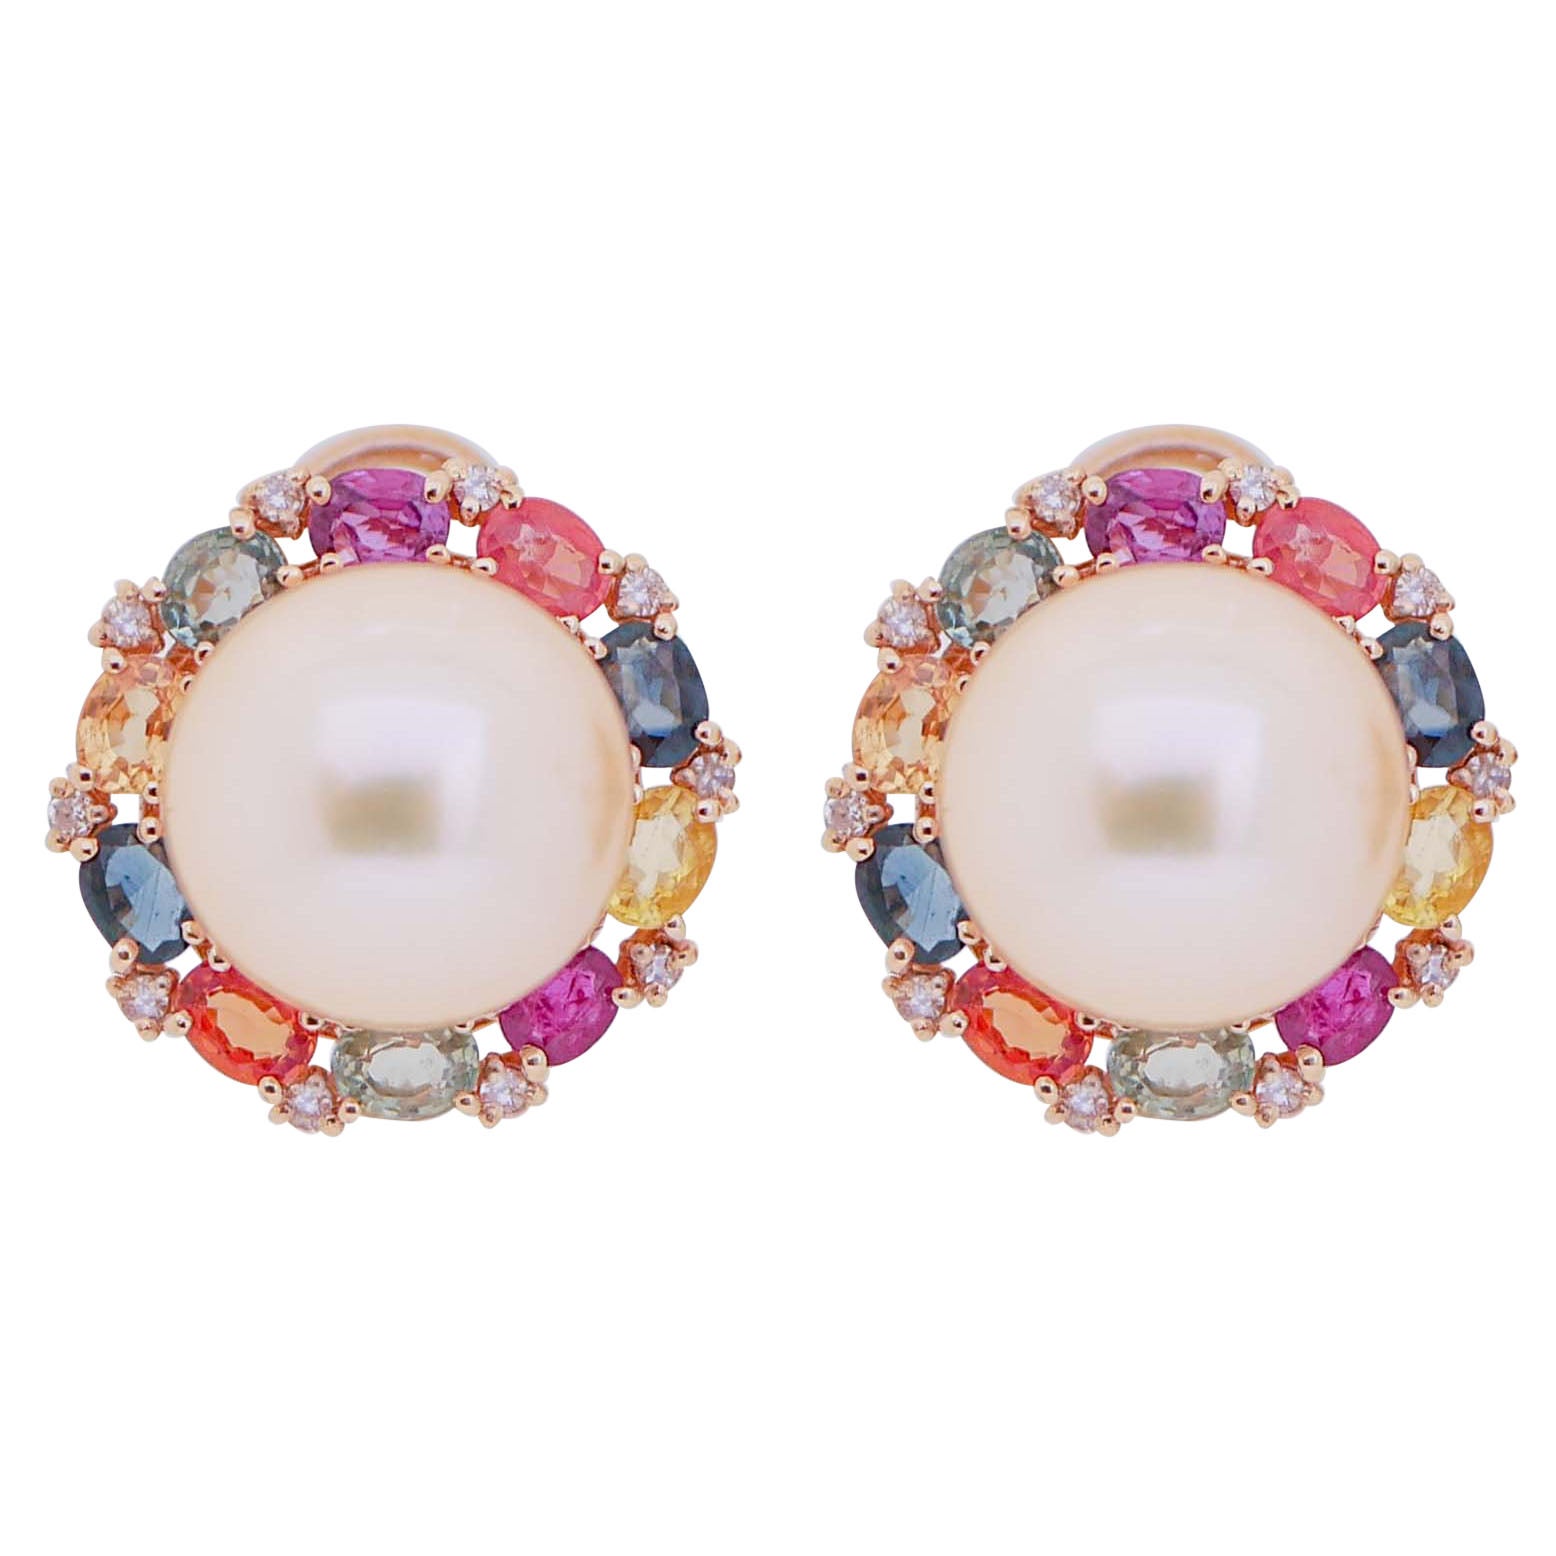 Multicolor Sapphires, Pearls, Rubies, Diamonds, 14 Karat Rose Gold Earrings.